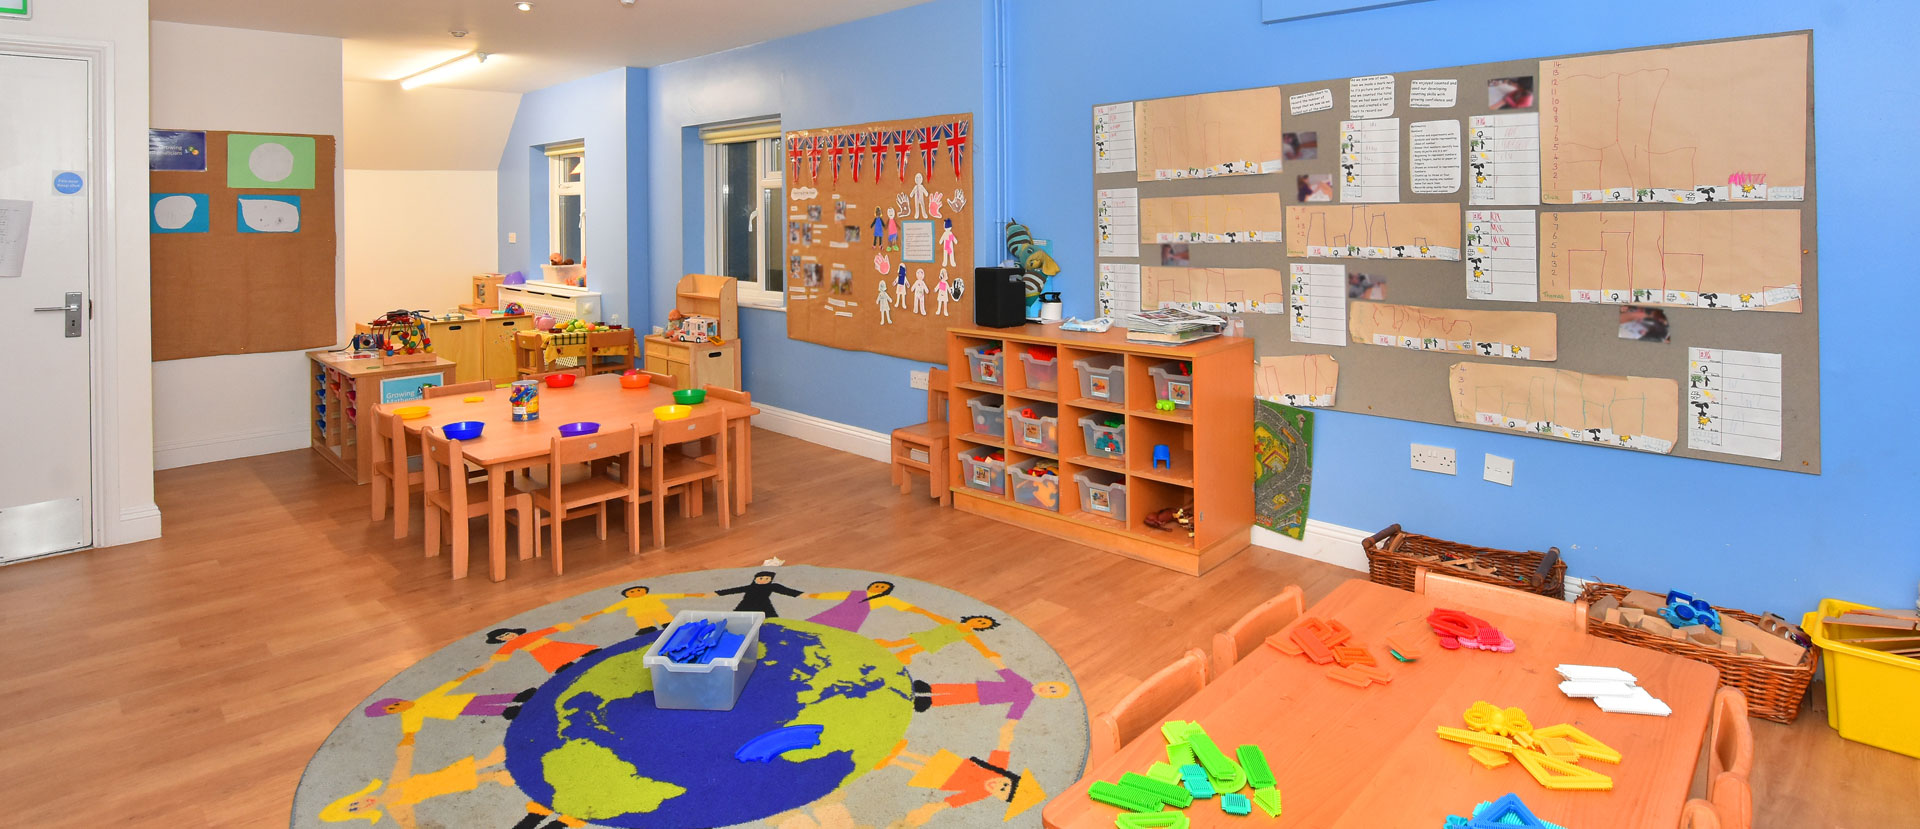 Maidstone Day Nursery and Preschool